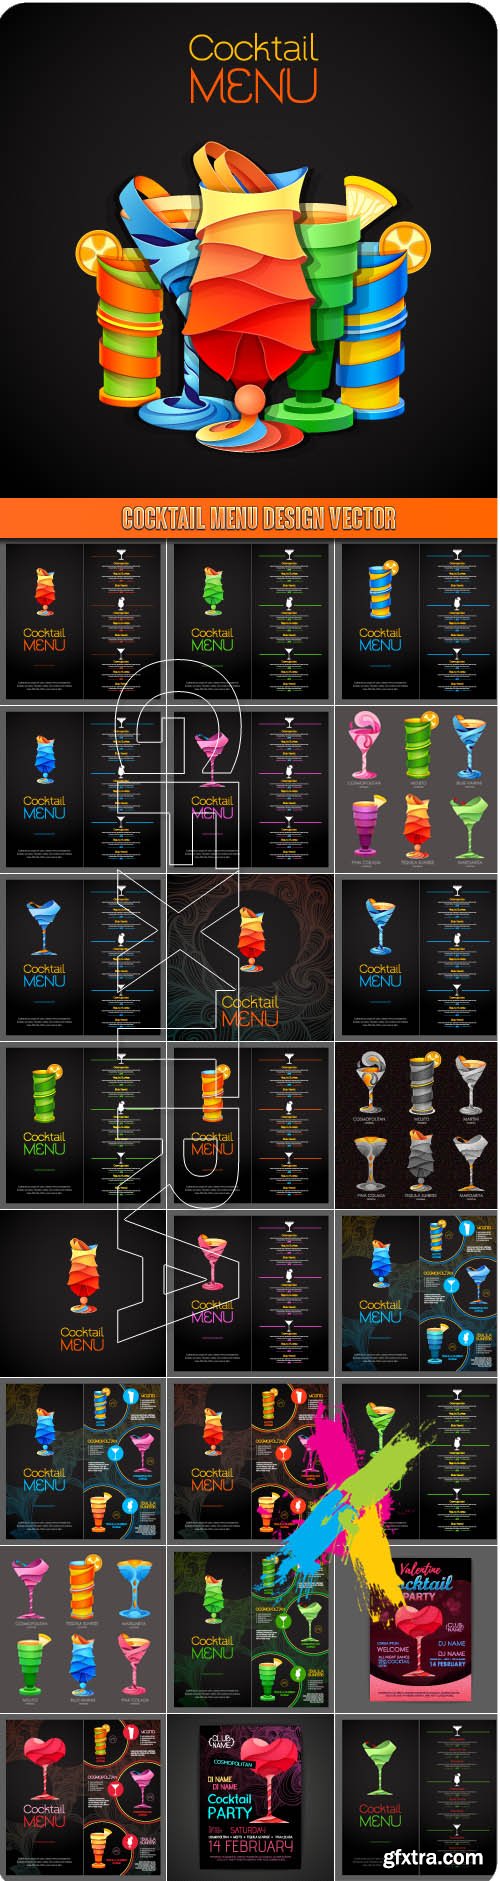 Cocktail Menu design vector